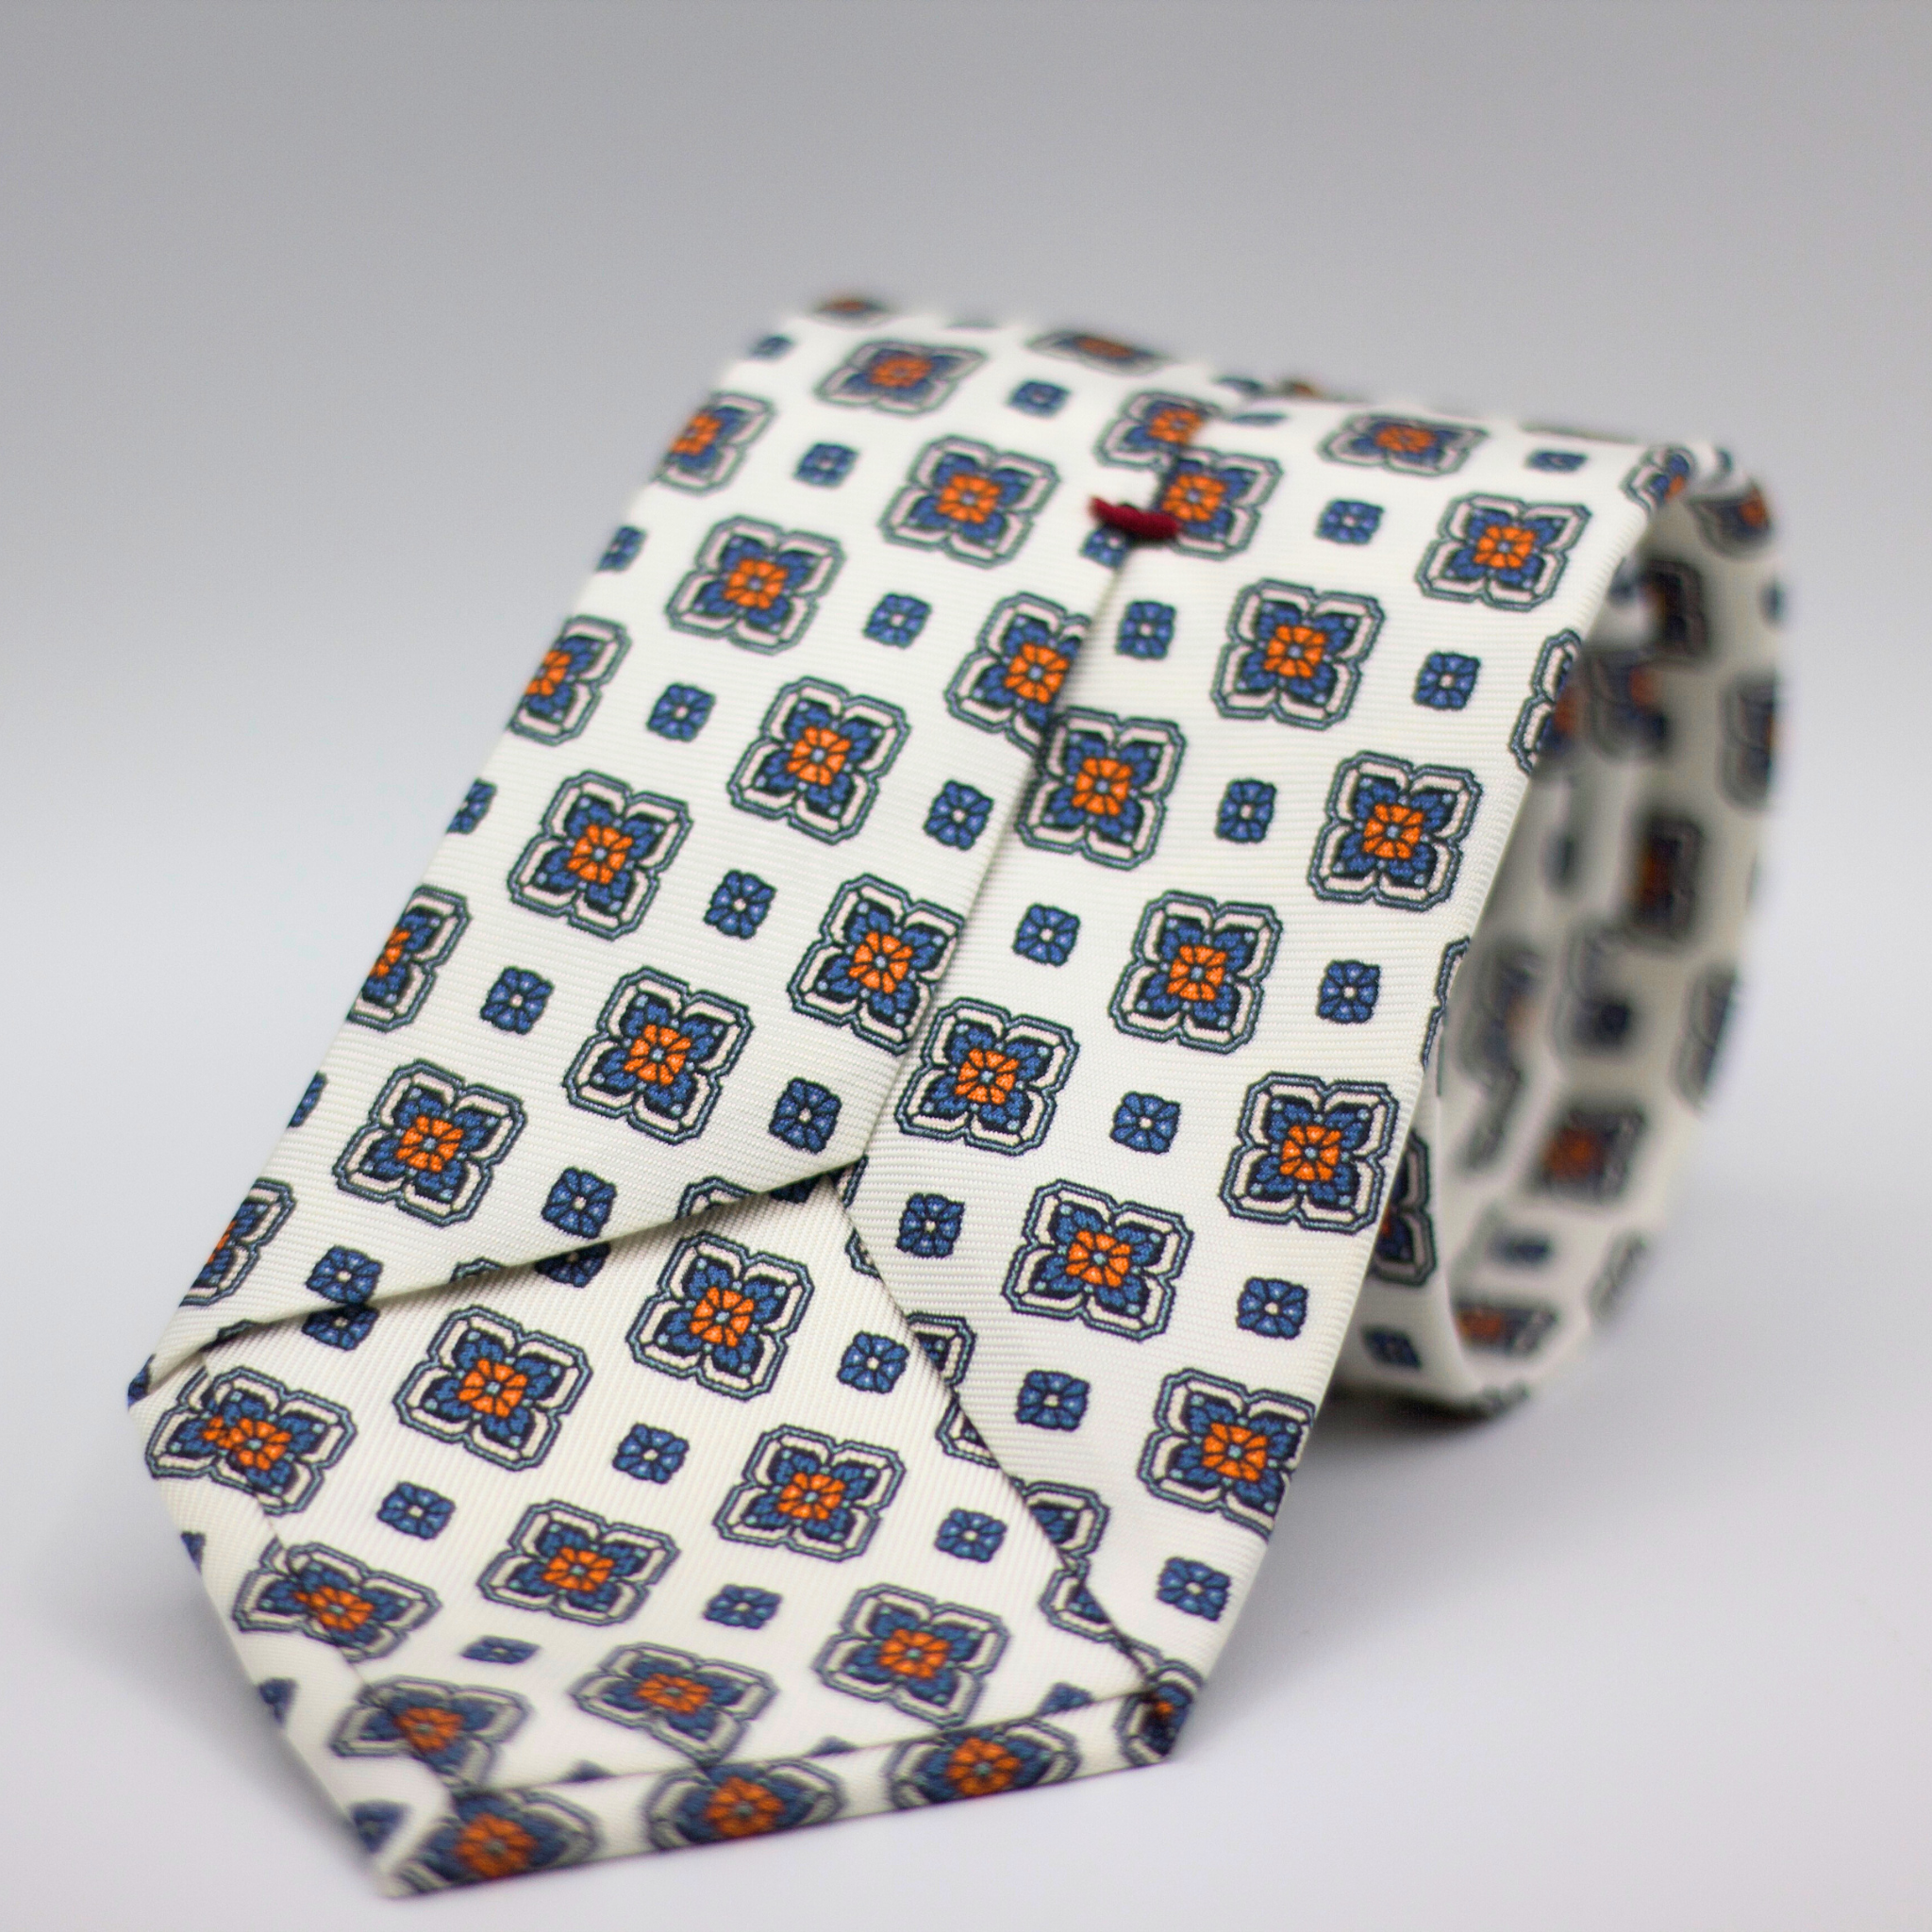 Cruciani & Bella 100% Silk Printed Self-Tipped White, Orange, Grey and Light Blue Motif Tie Handmade in Rome, Italy. 8 cm x 150 cm